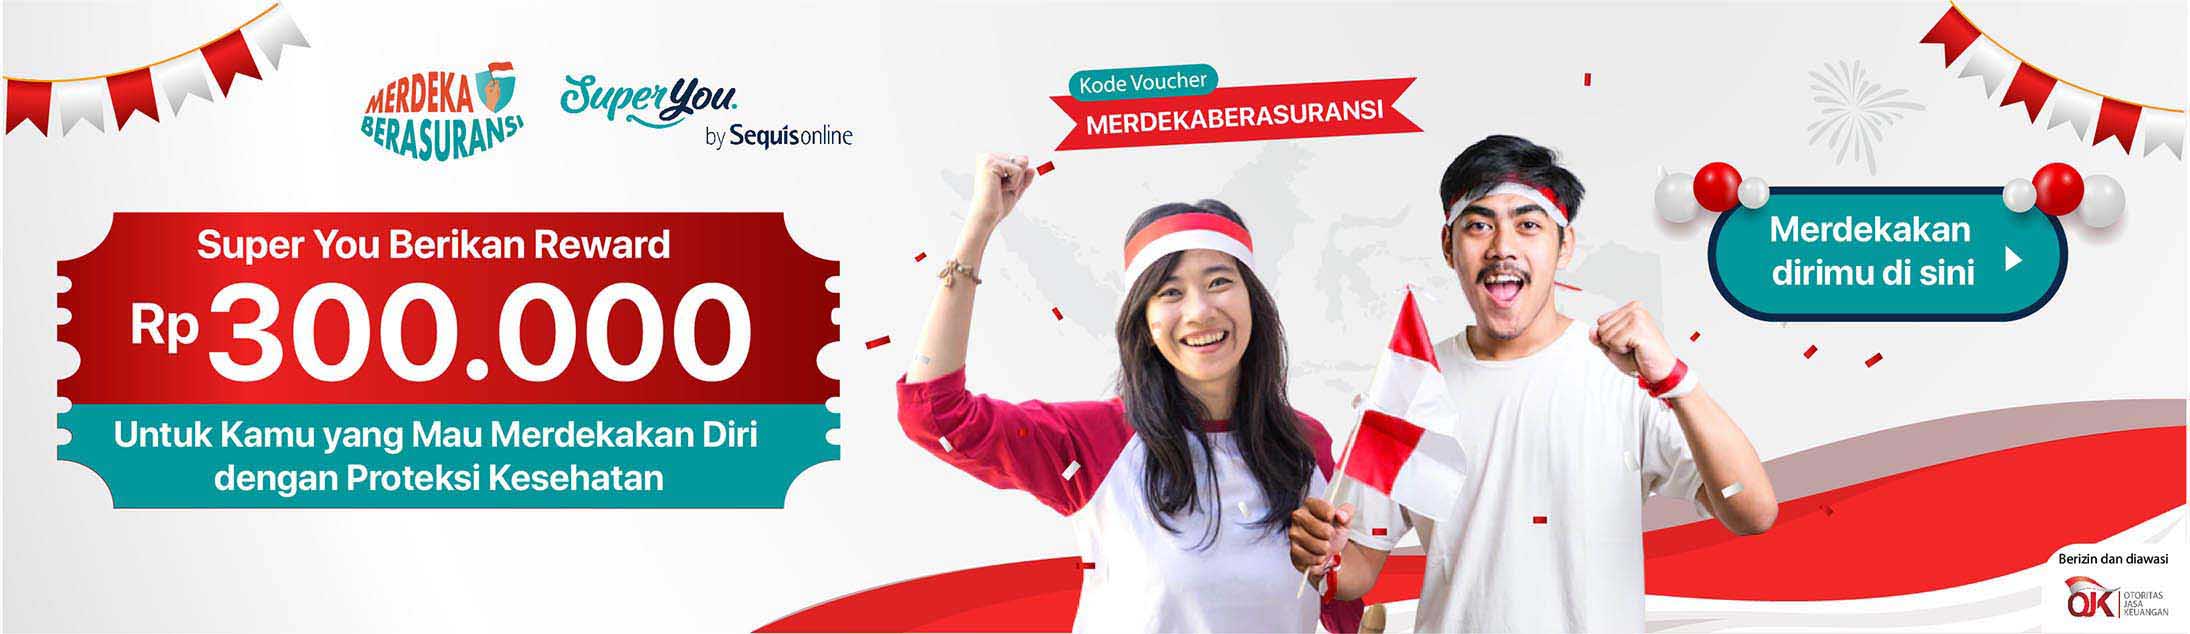 Merdeka Campaign